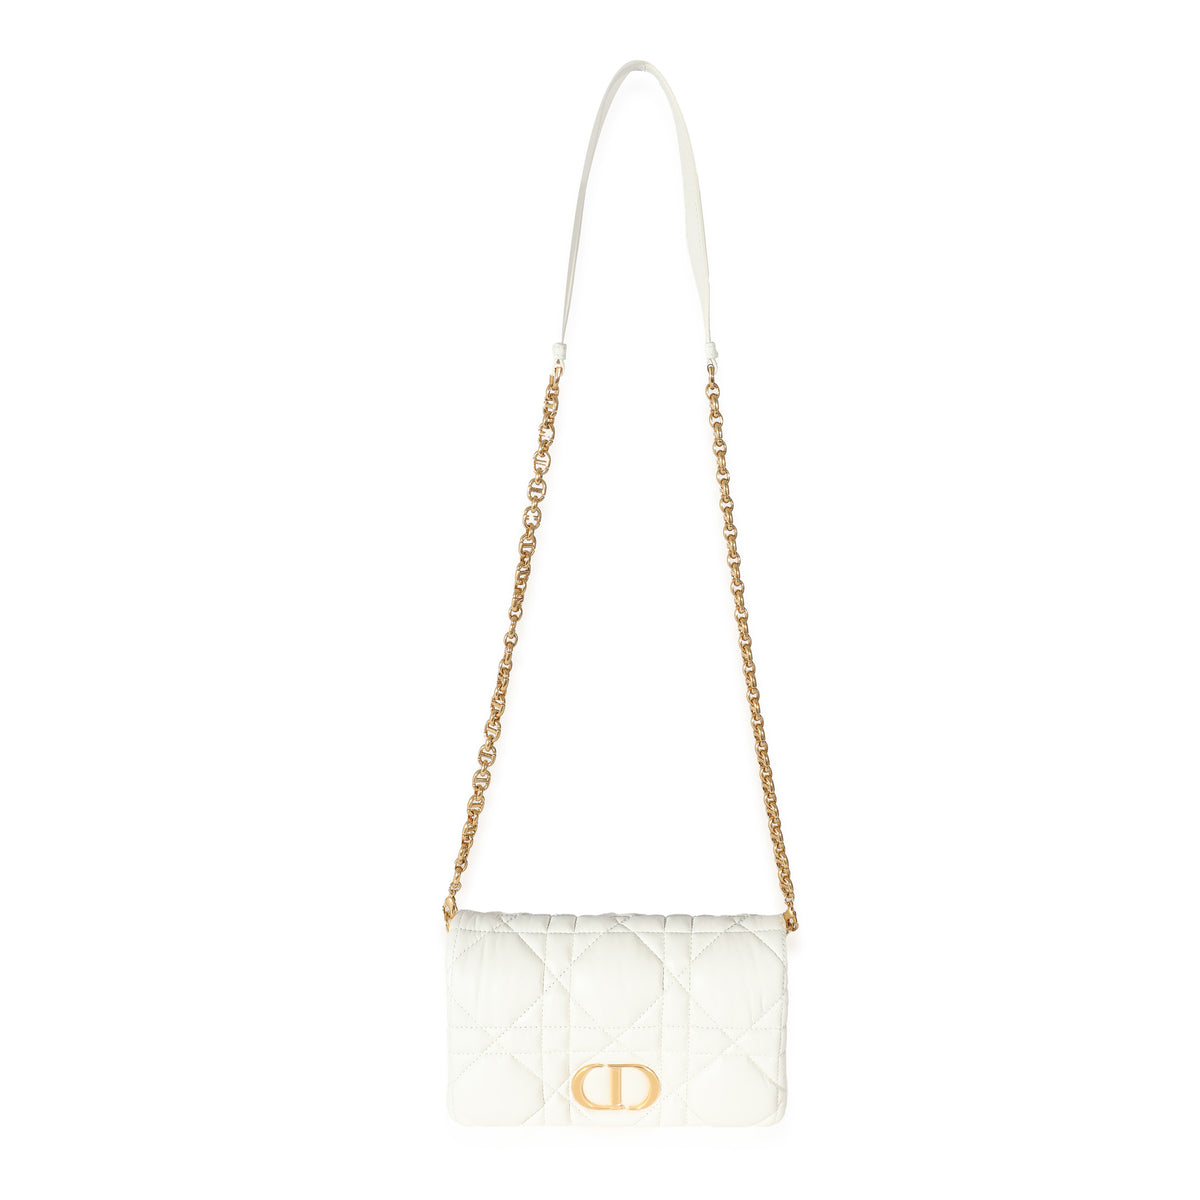 Dior caro white bag - Gem